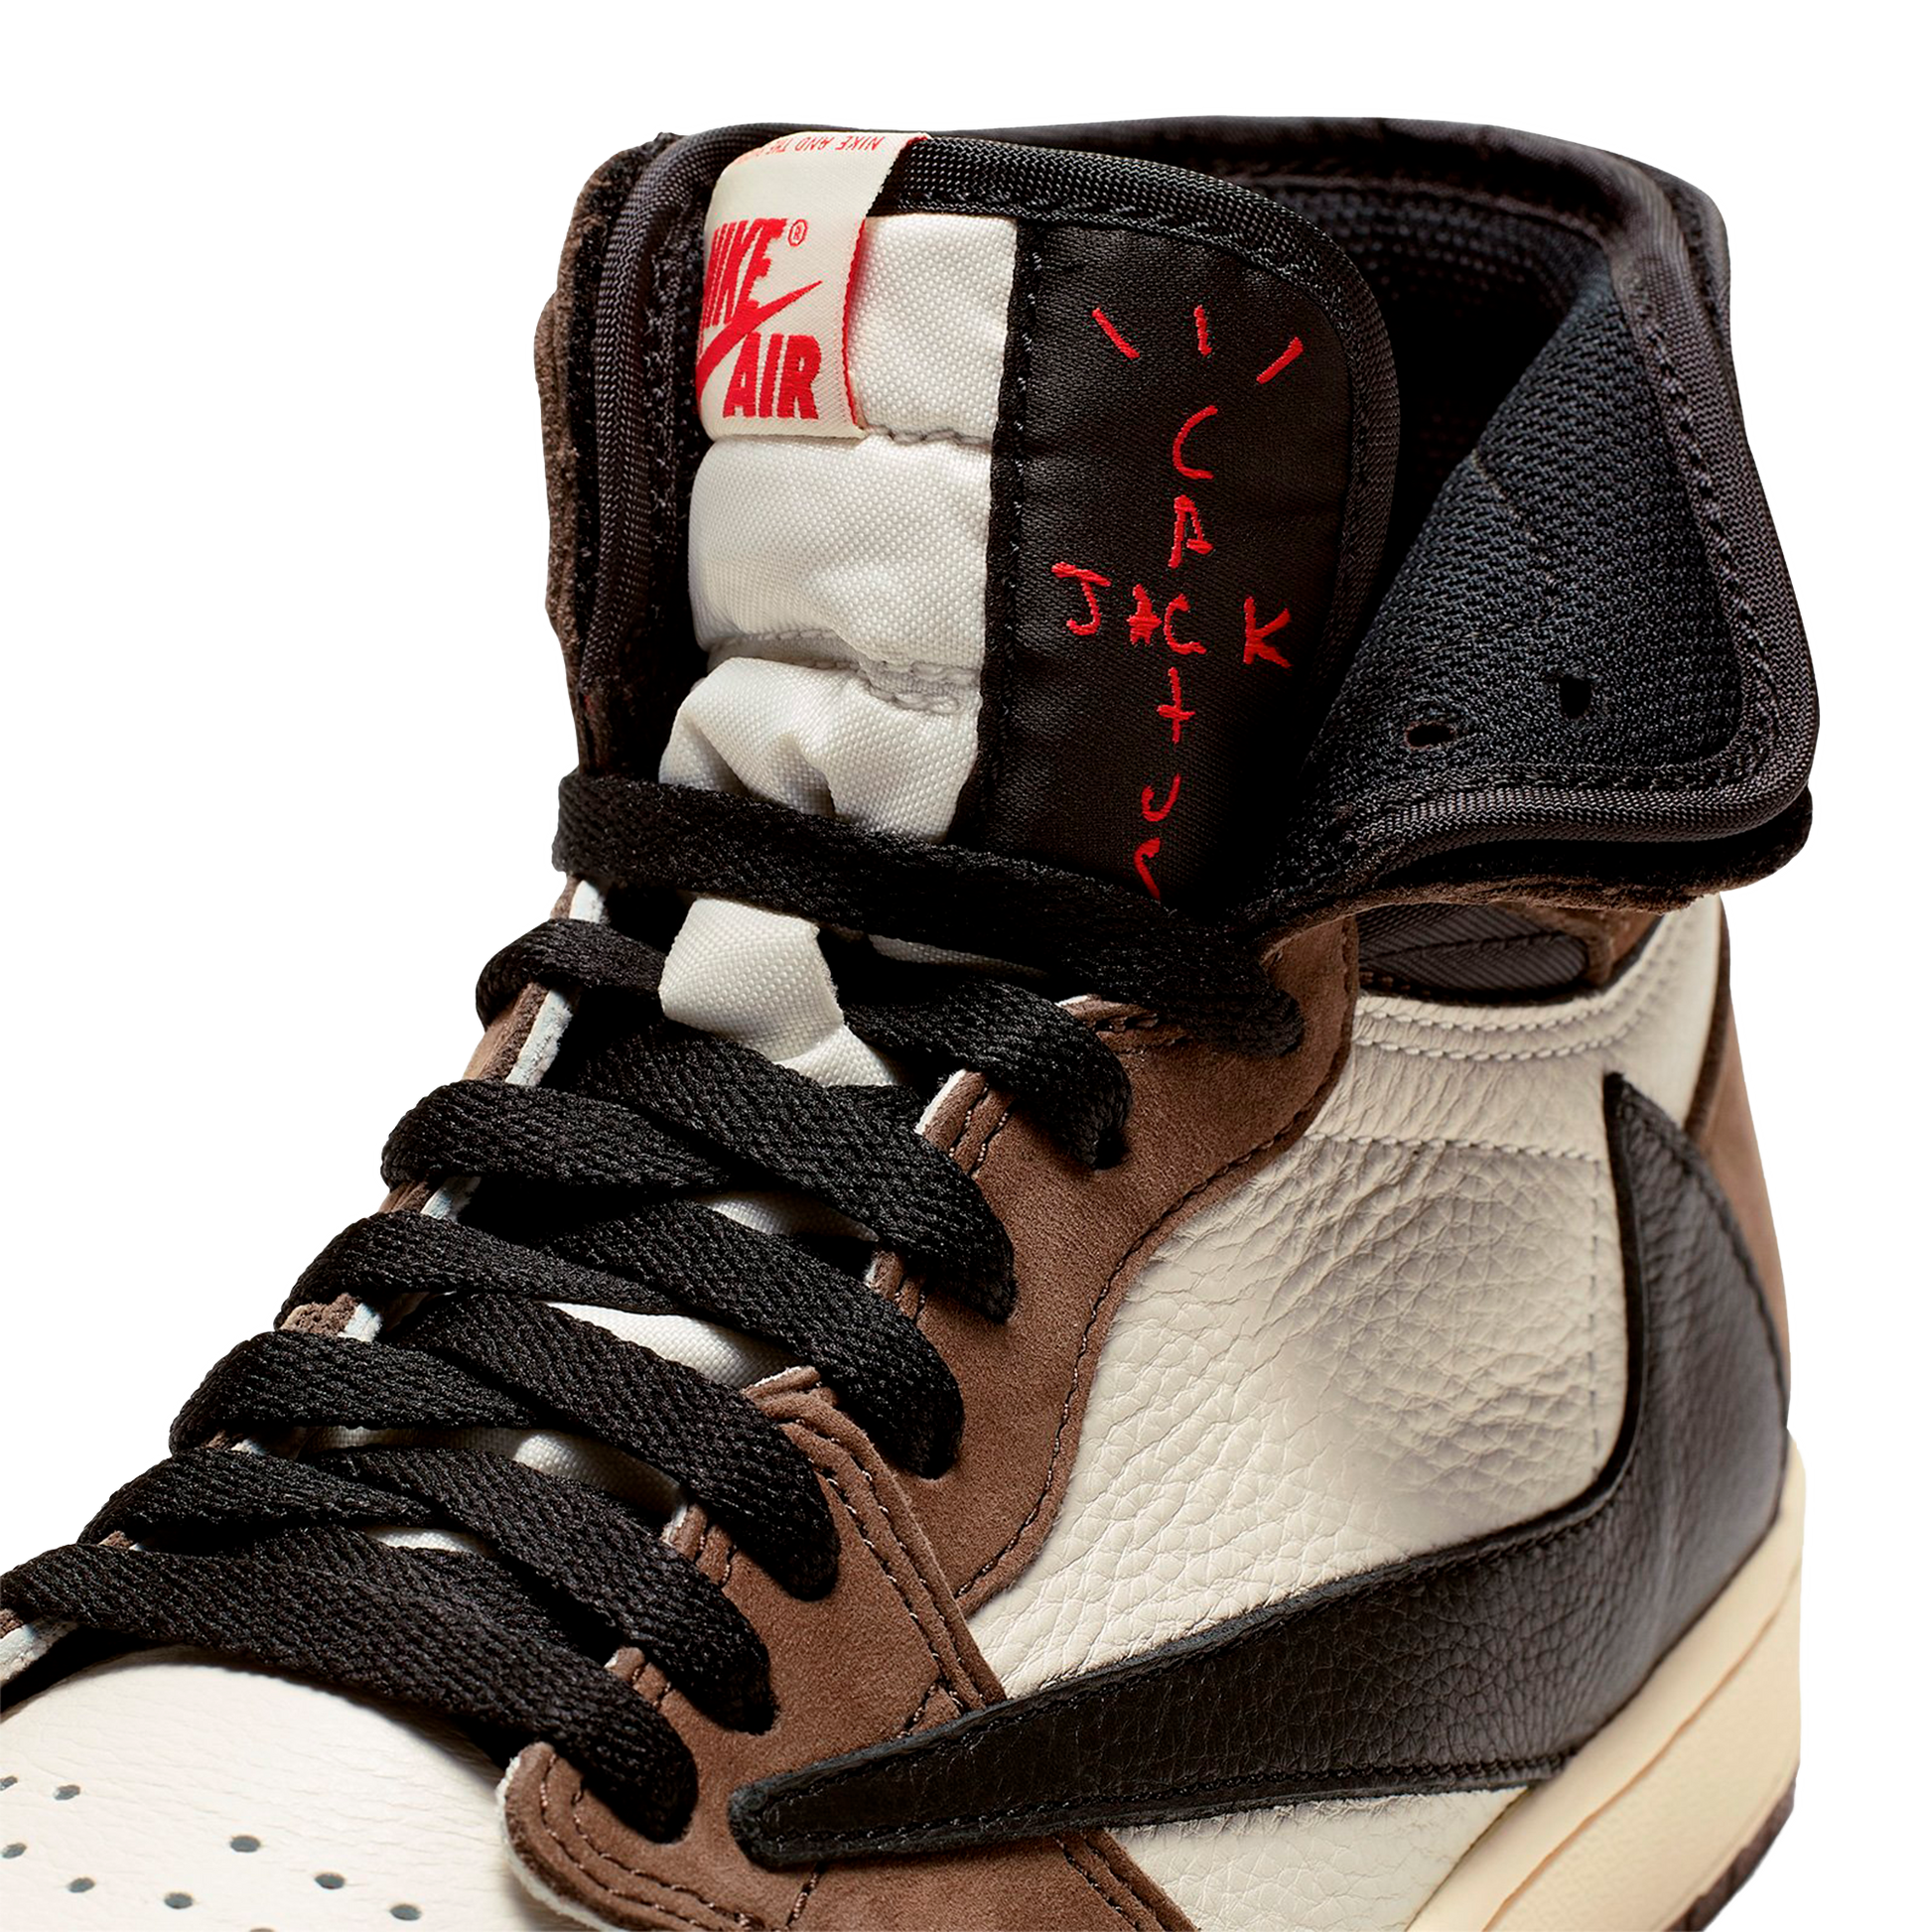 Nike Air Jordan 1 Travis Scott. Nike Air Jordan Cactus Jack. Air jordan high travis scott